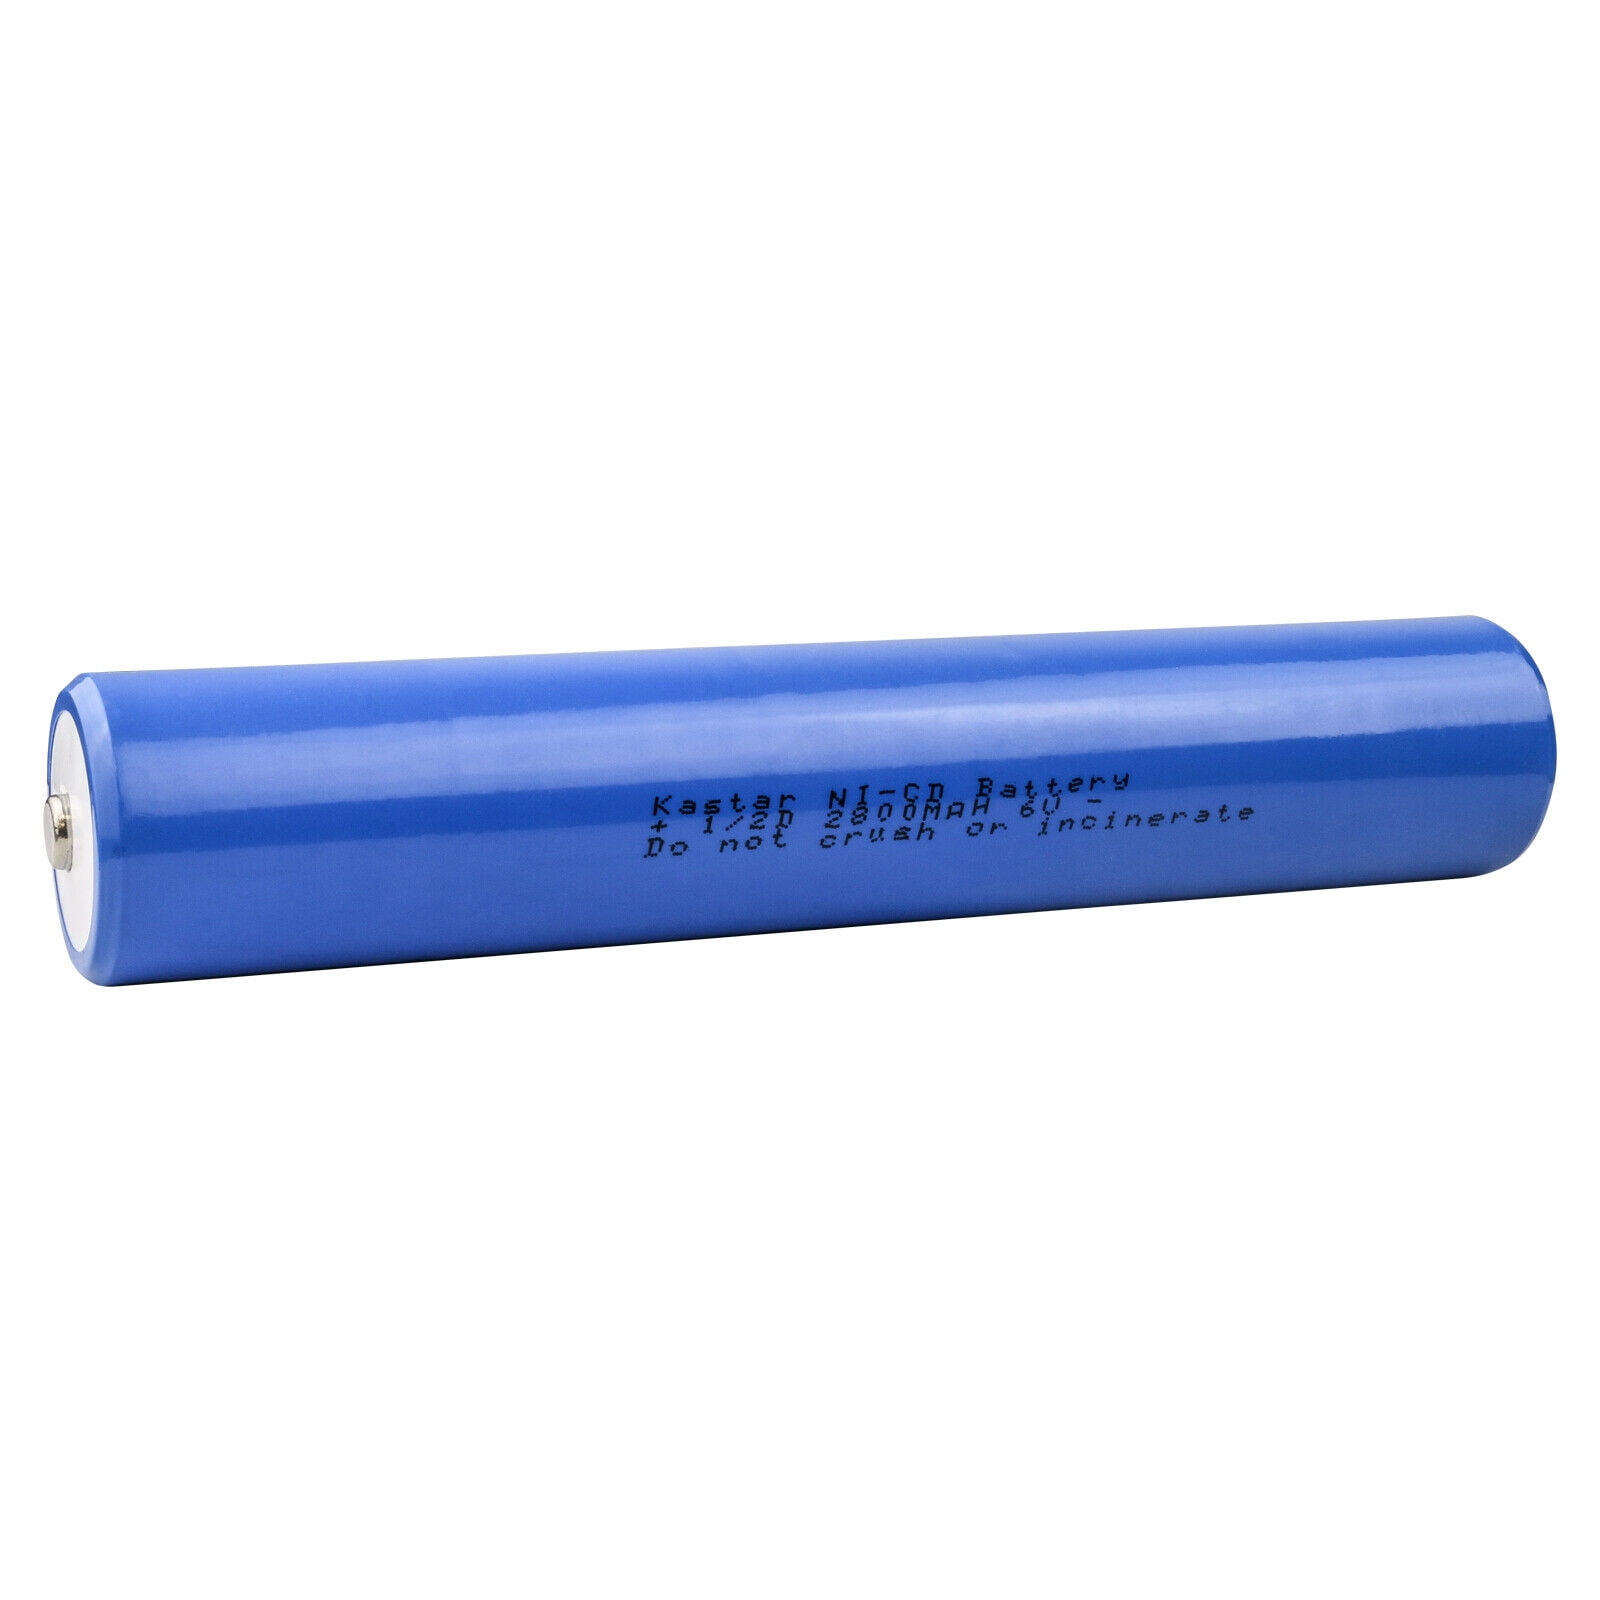 HQRP Batterie Für Maglite N38AF008A 108-817 108-000-439 40070249 ARXX235 ARXX075 